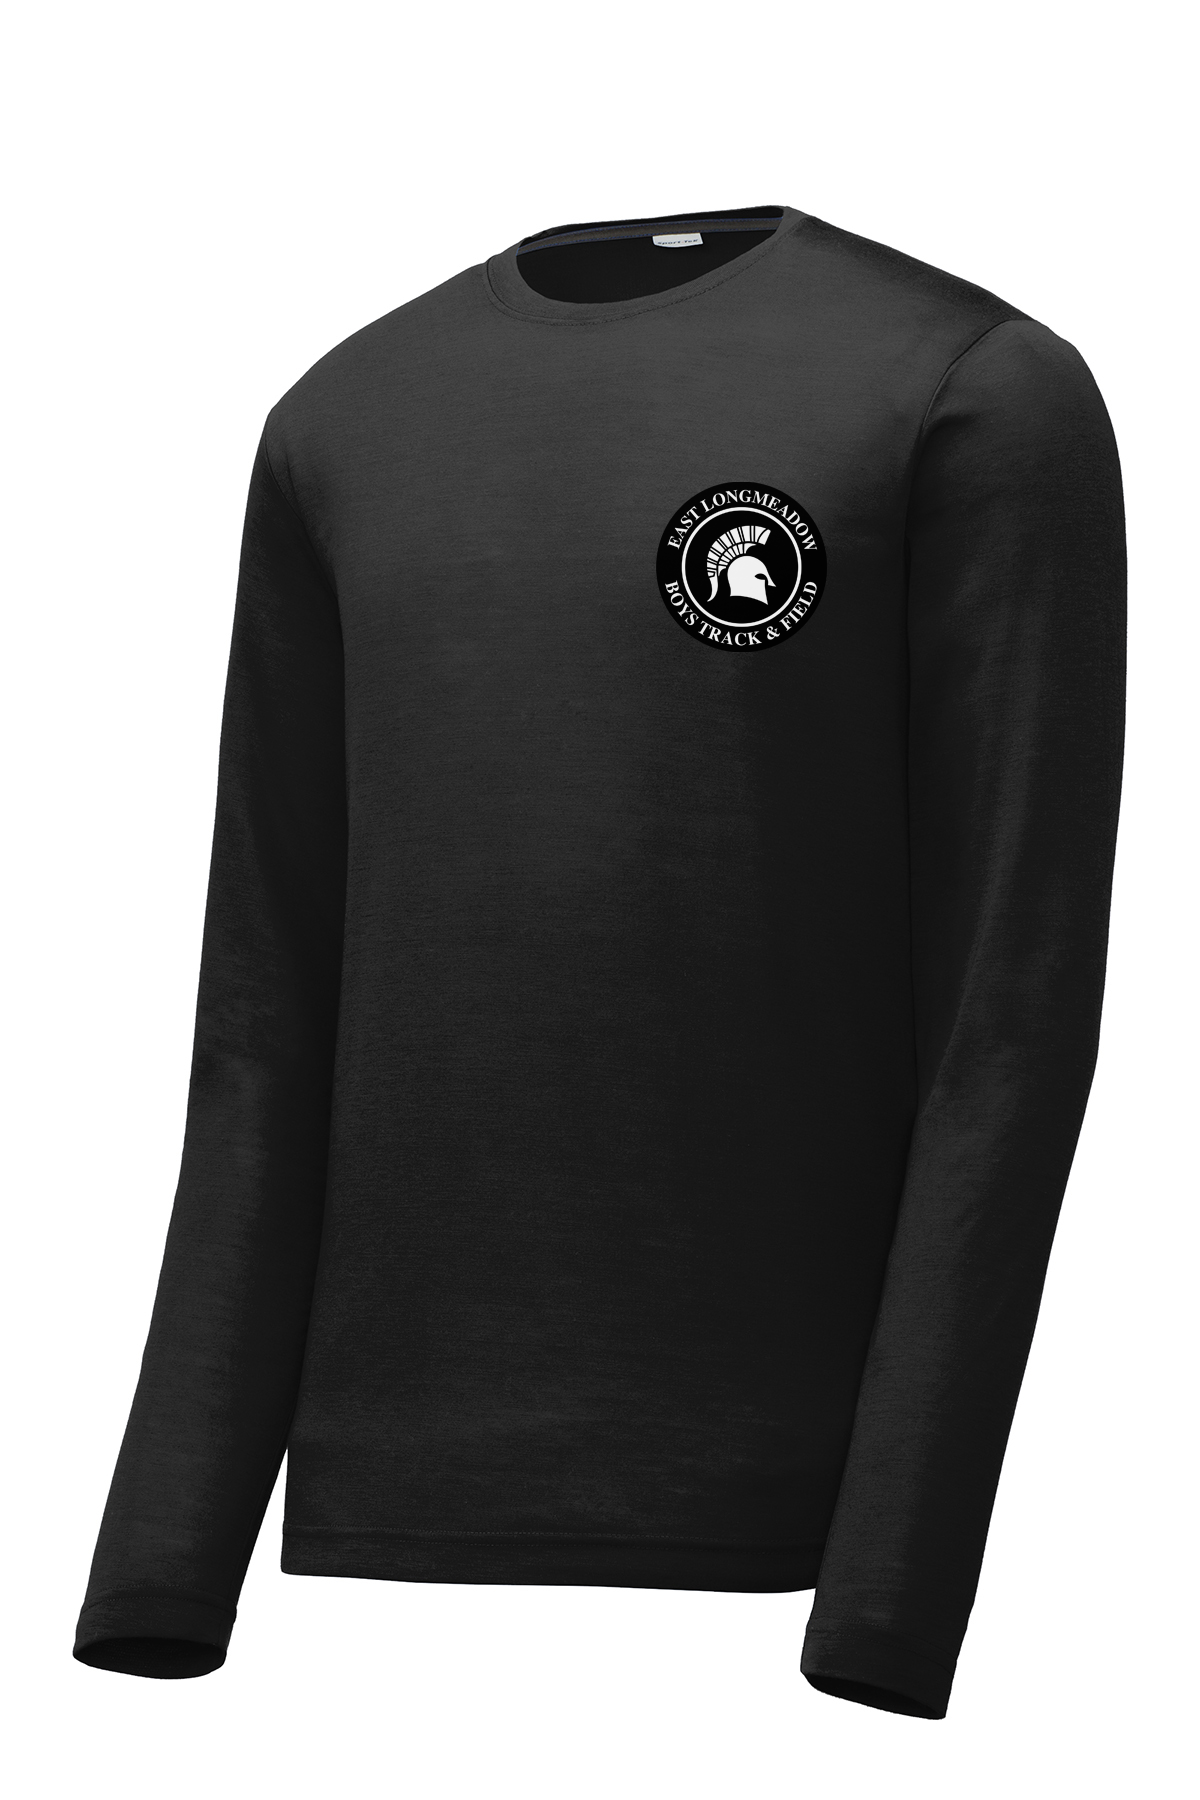 East Longmeadow Boys Track - Men's Long-Sleeve CottonTouch Performance Shirt (Black)